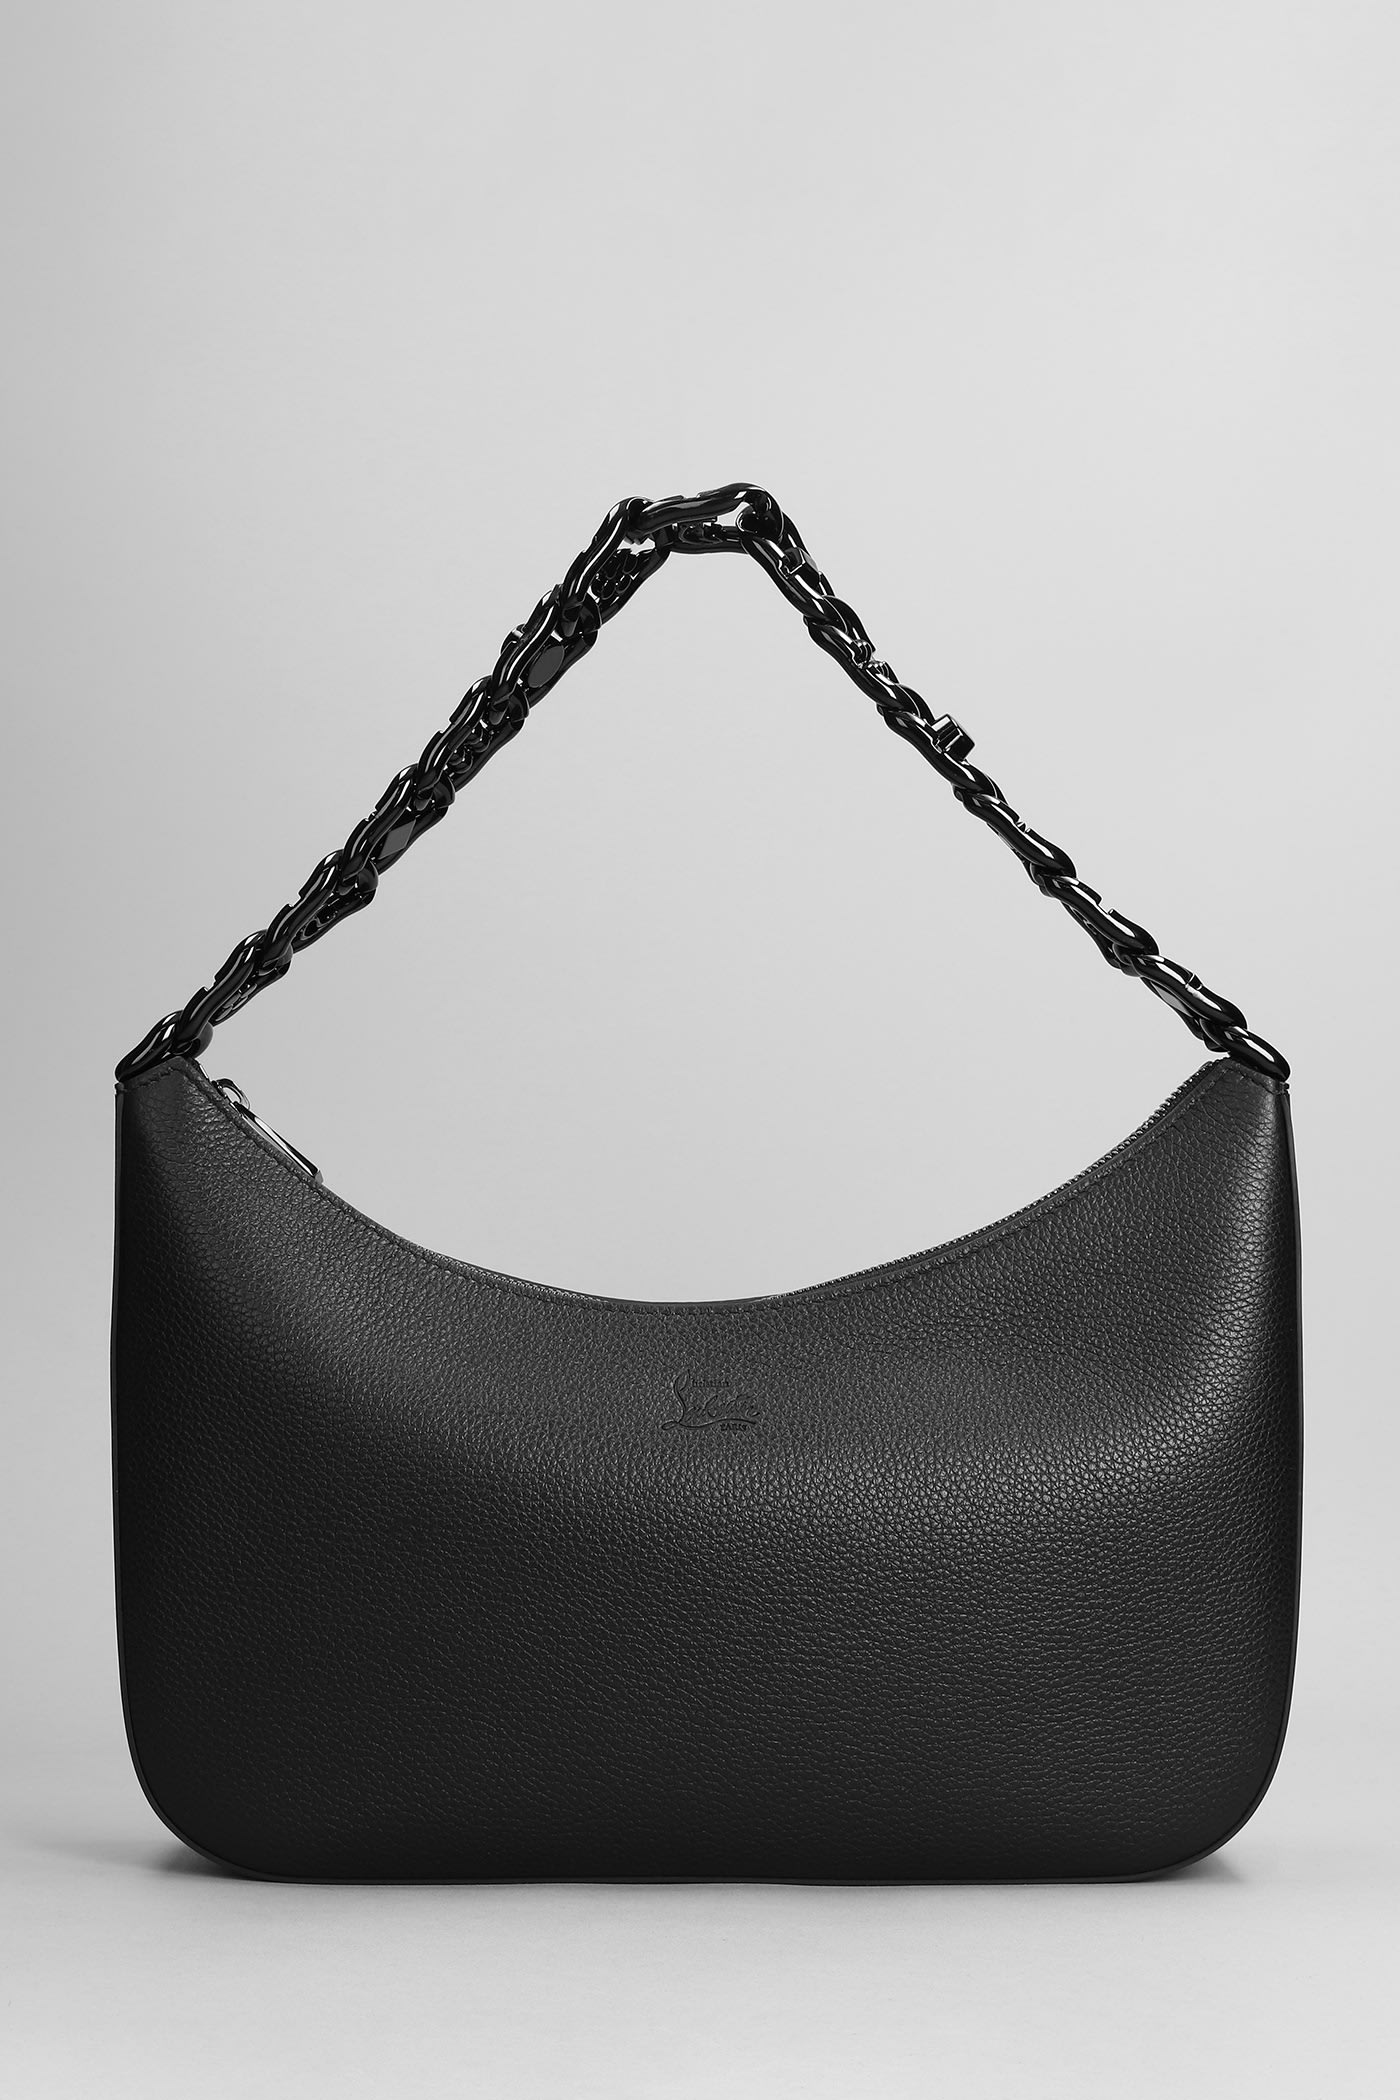 Christian Louboutin Loubila Chain Black Mini Shoulder Bag